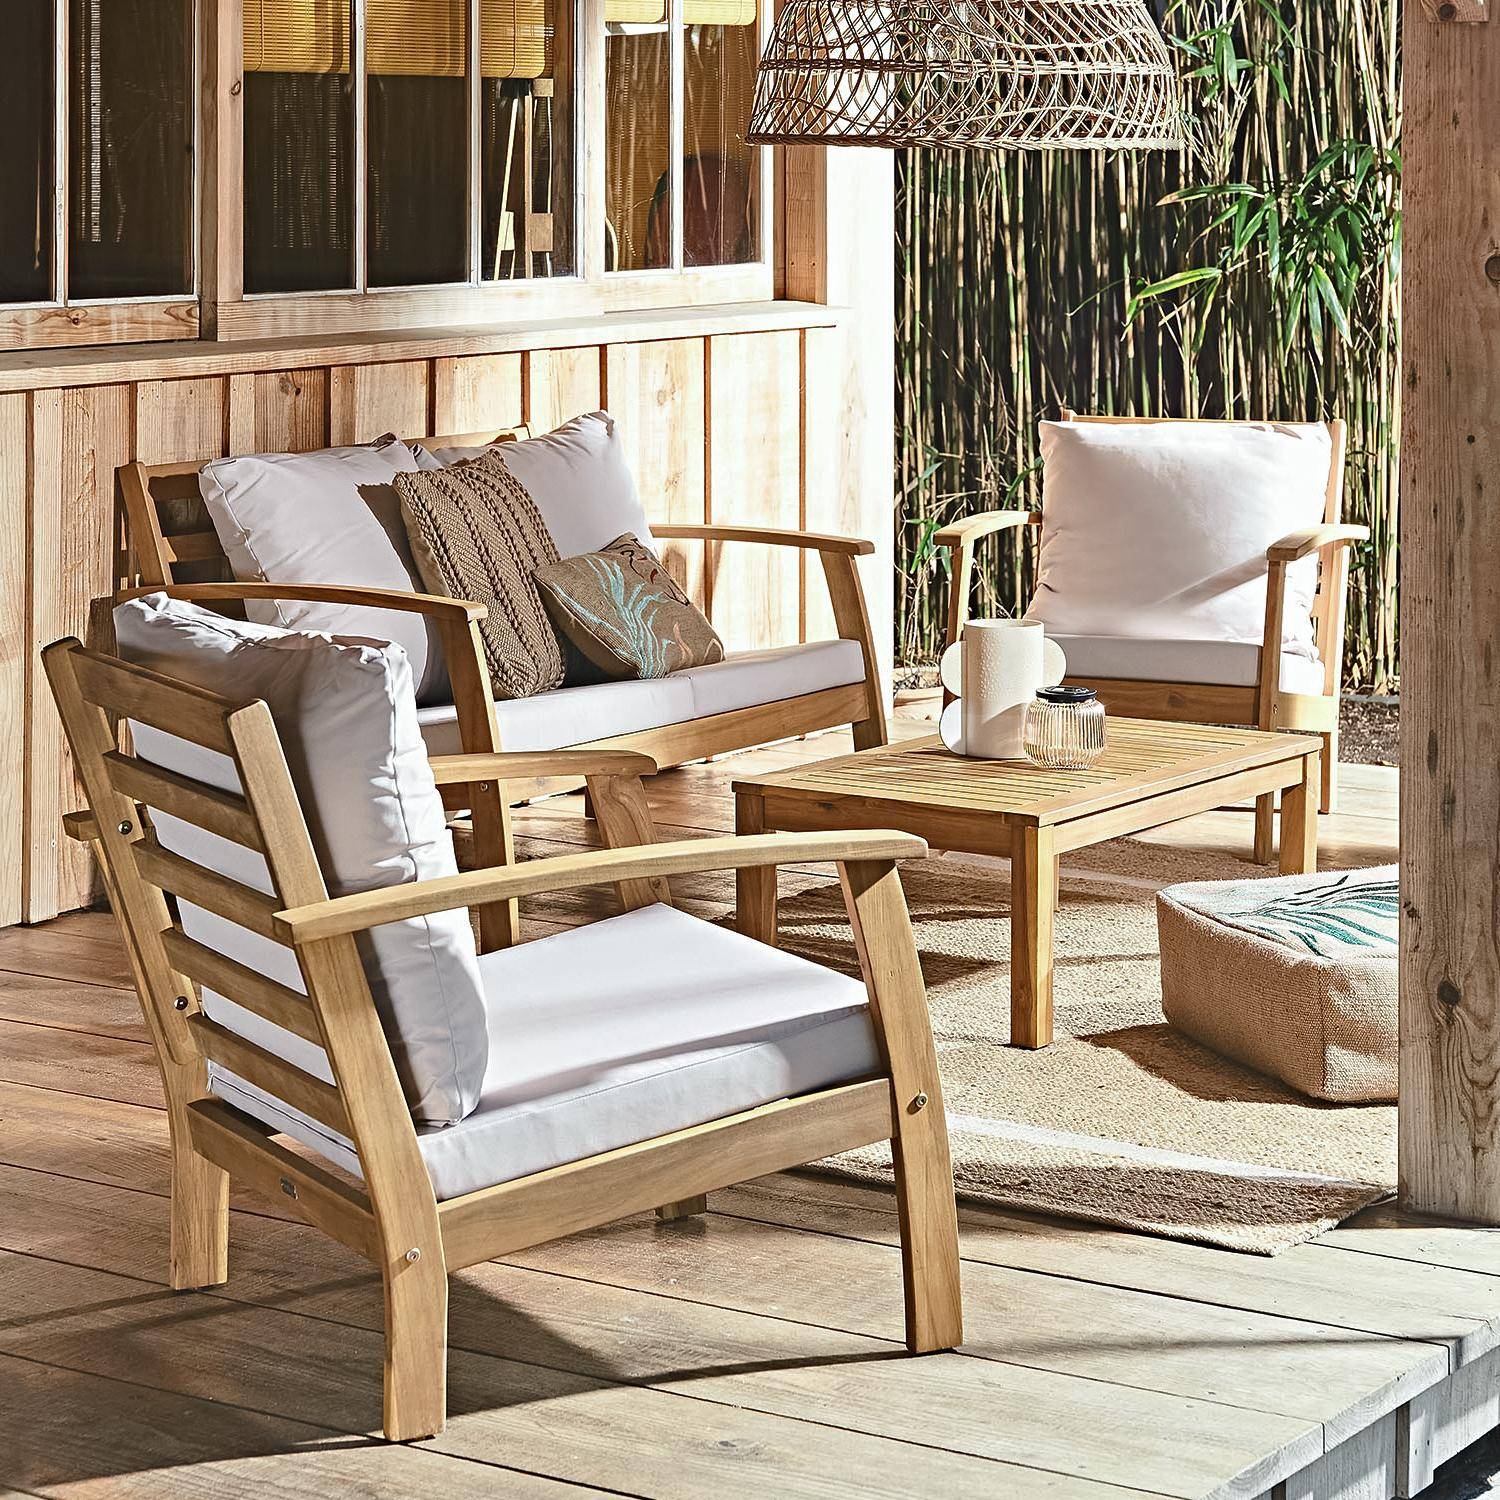 4-seater wooden garden sofa - Acacia wood sofa, armchairs and coffee table, designer piece  - Ushuaia - Off-white,sweeek,Photo1